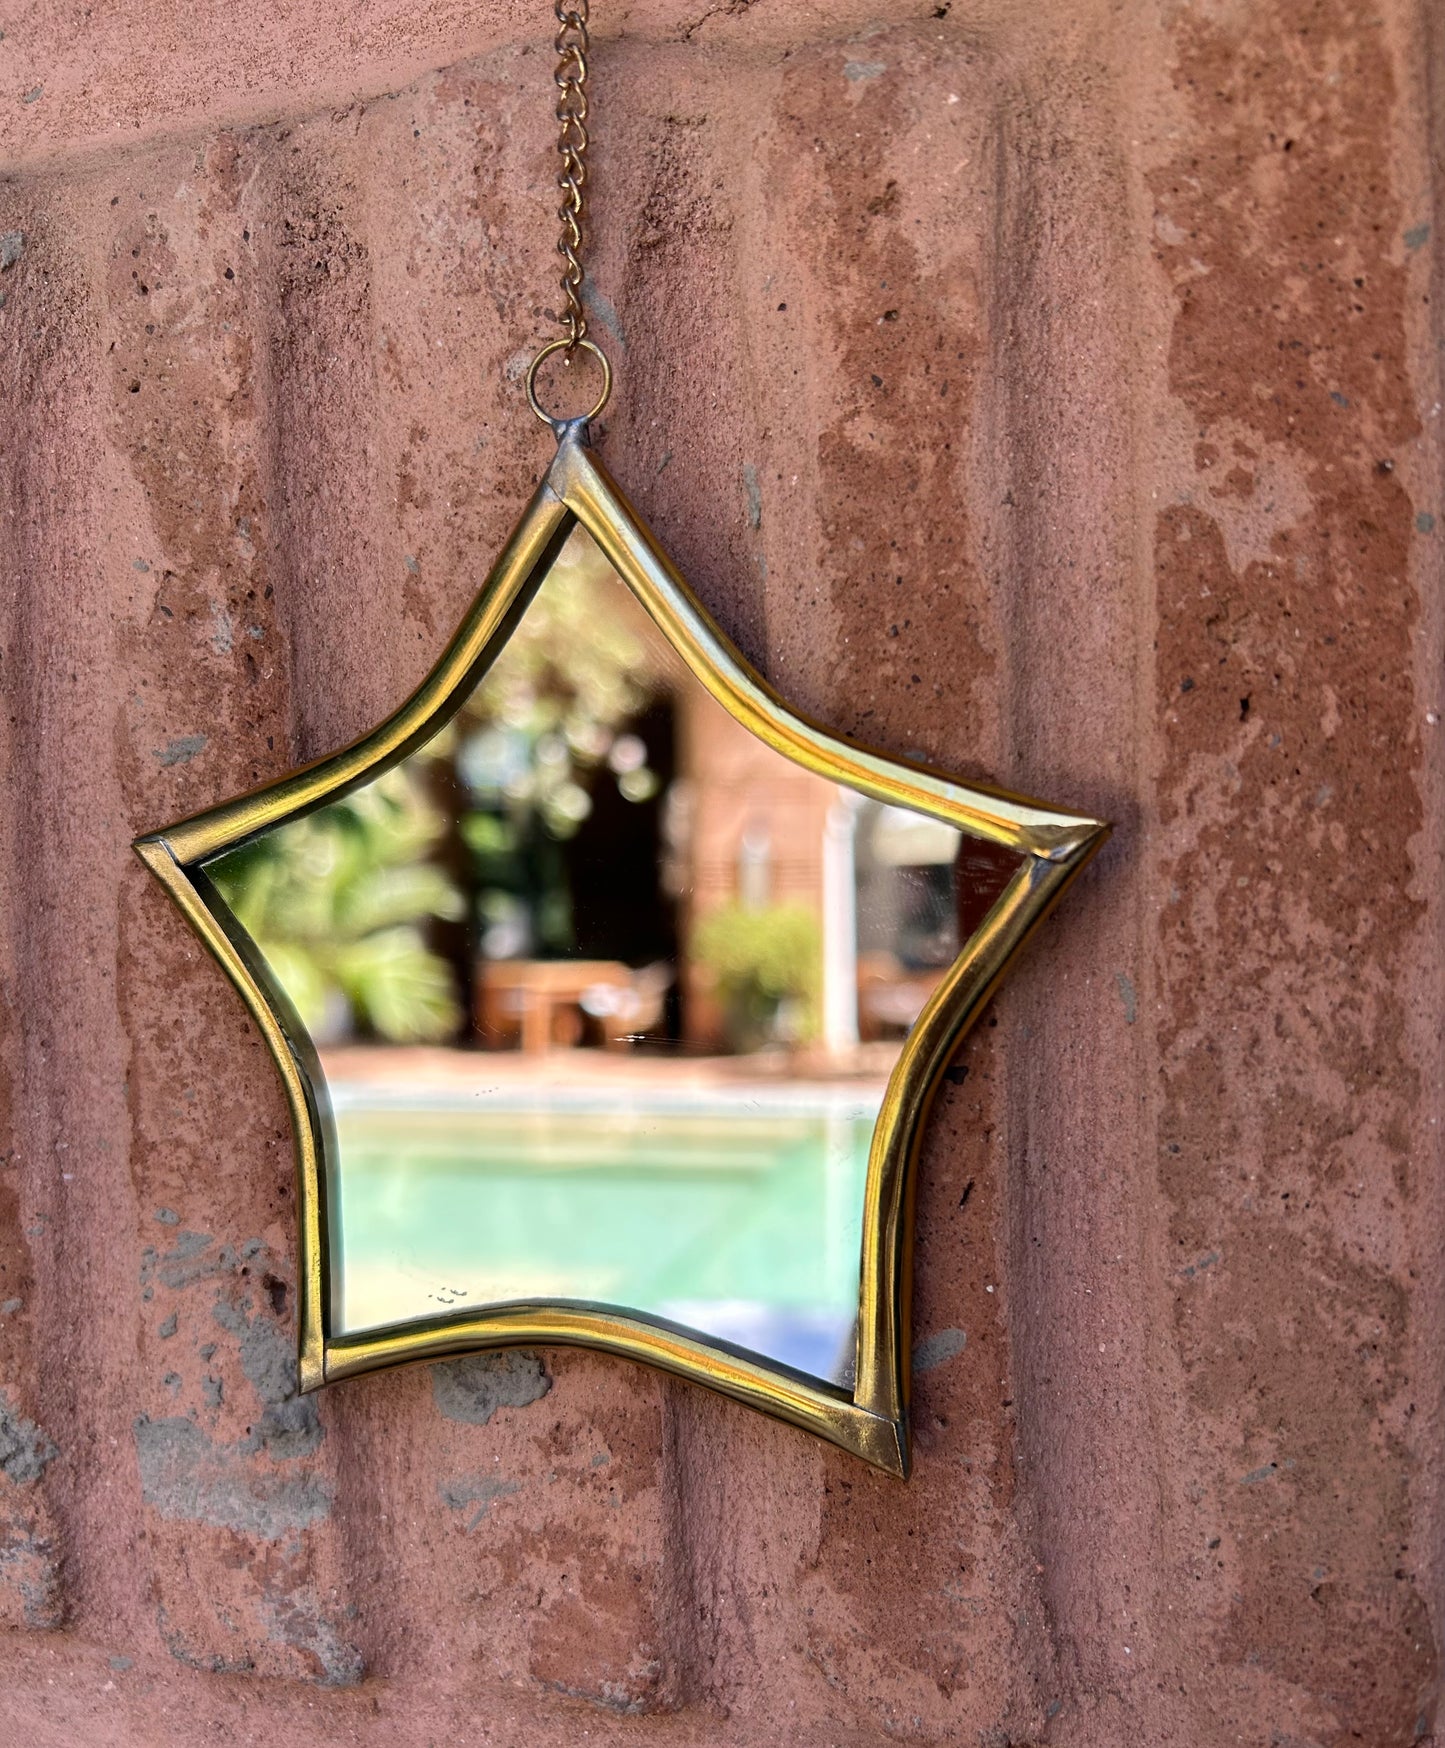 Handmade brass mirror on a chain drop eye or star